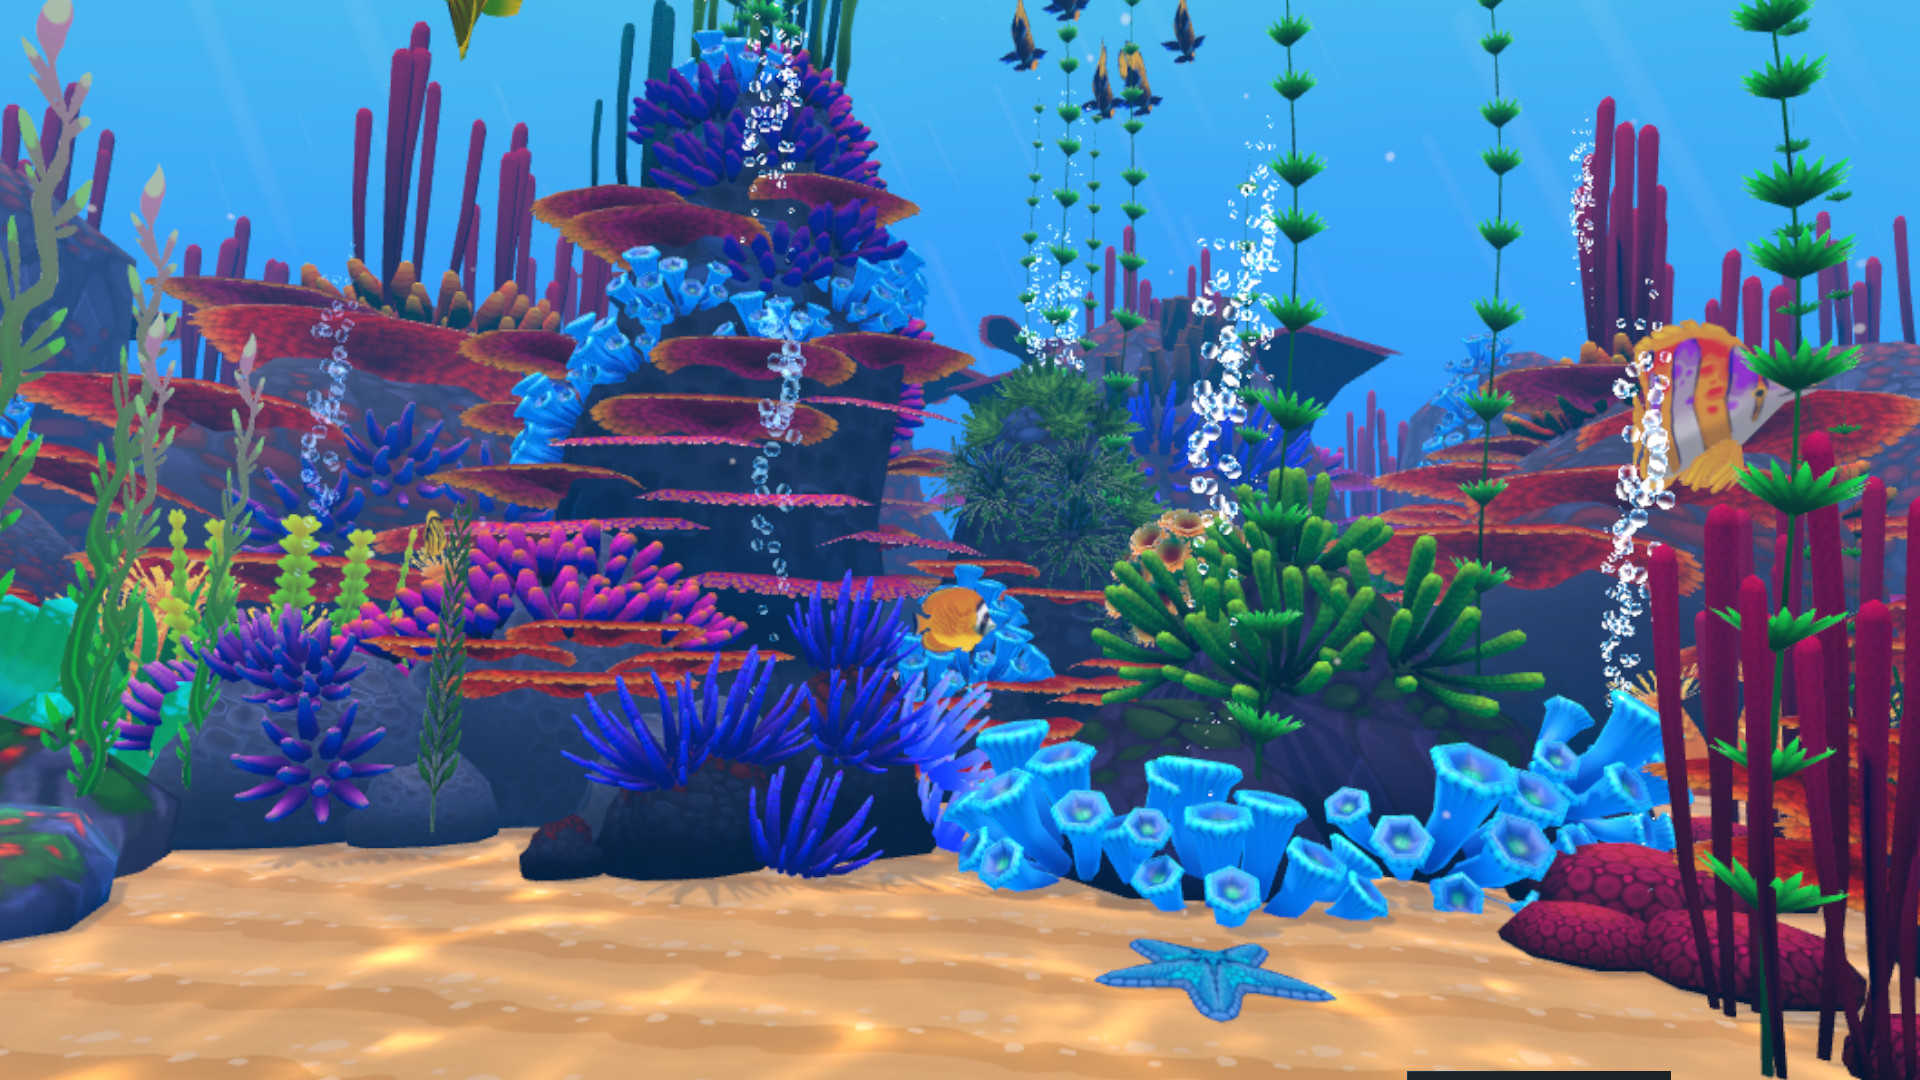 Toon Ocean VR screenshot